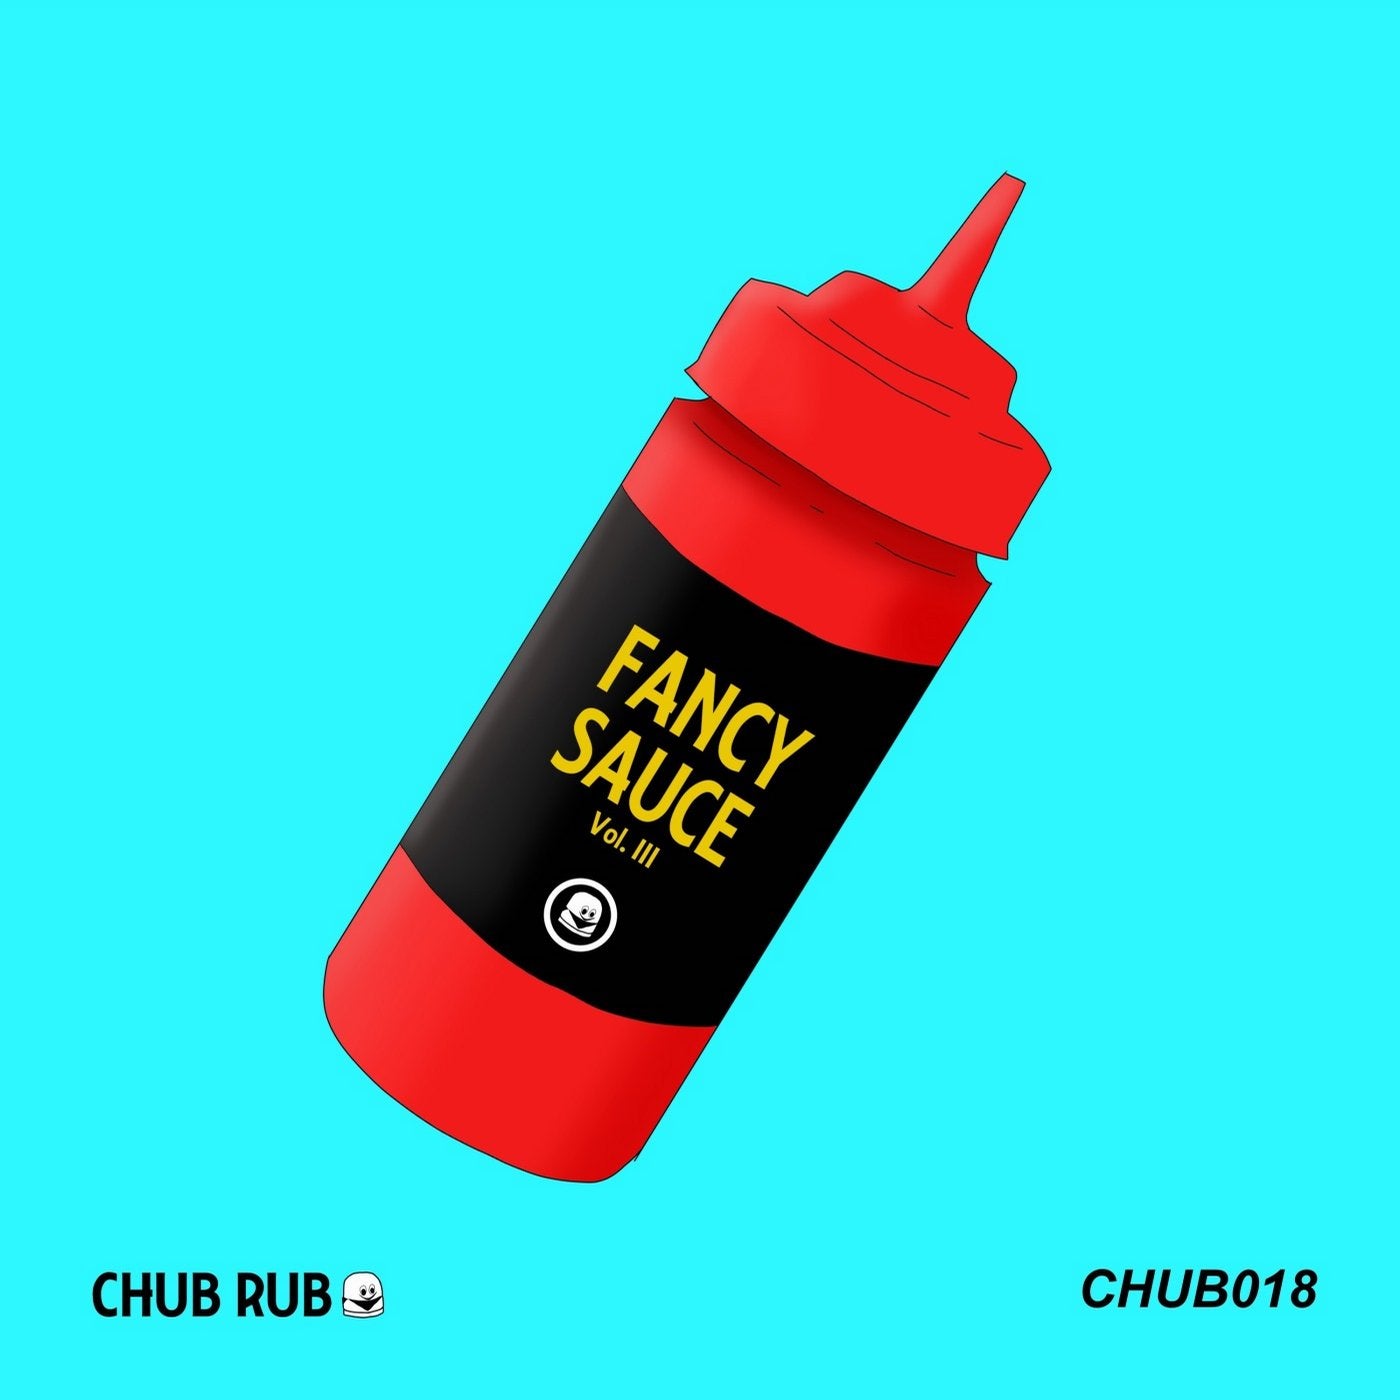 CHUB RUB: Fancy Sauce Vol. III